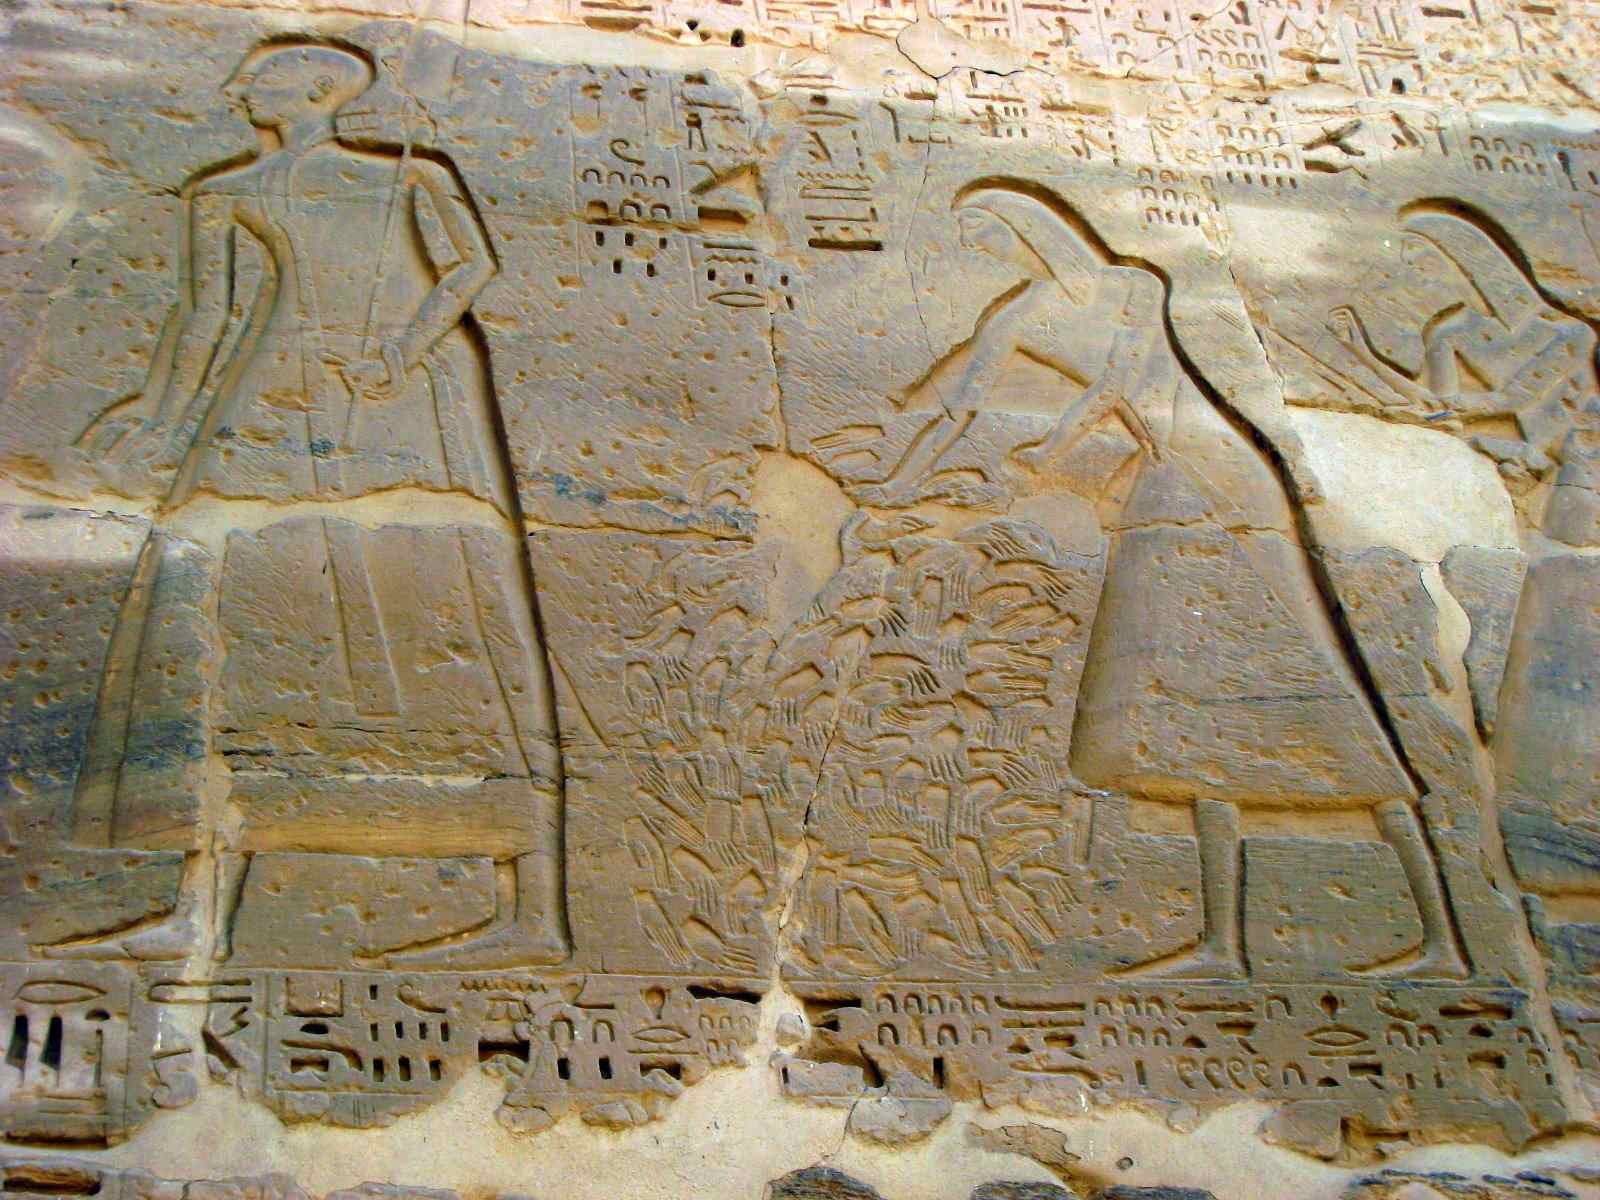 Ramesses III បានសុំឱ្យកងទ័ពរបស់គាត់ប្រគល់ដៃរបស់ទាហានសត្រូវ